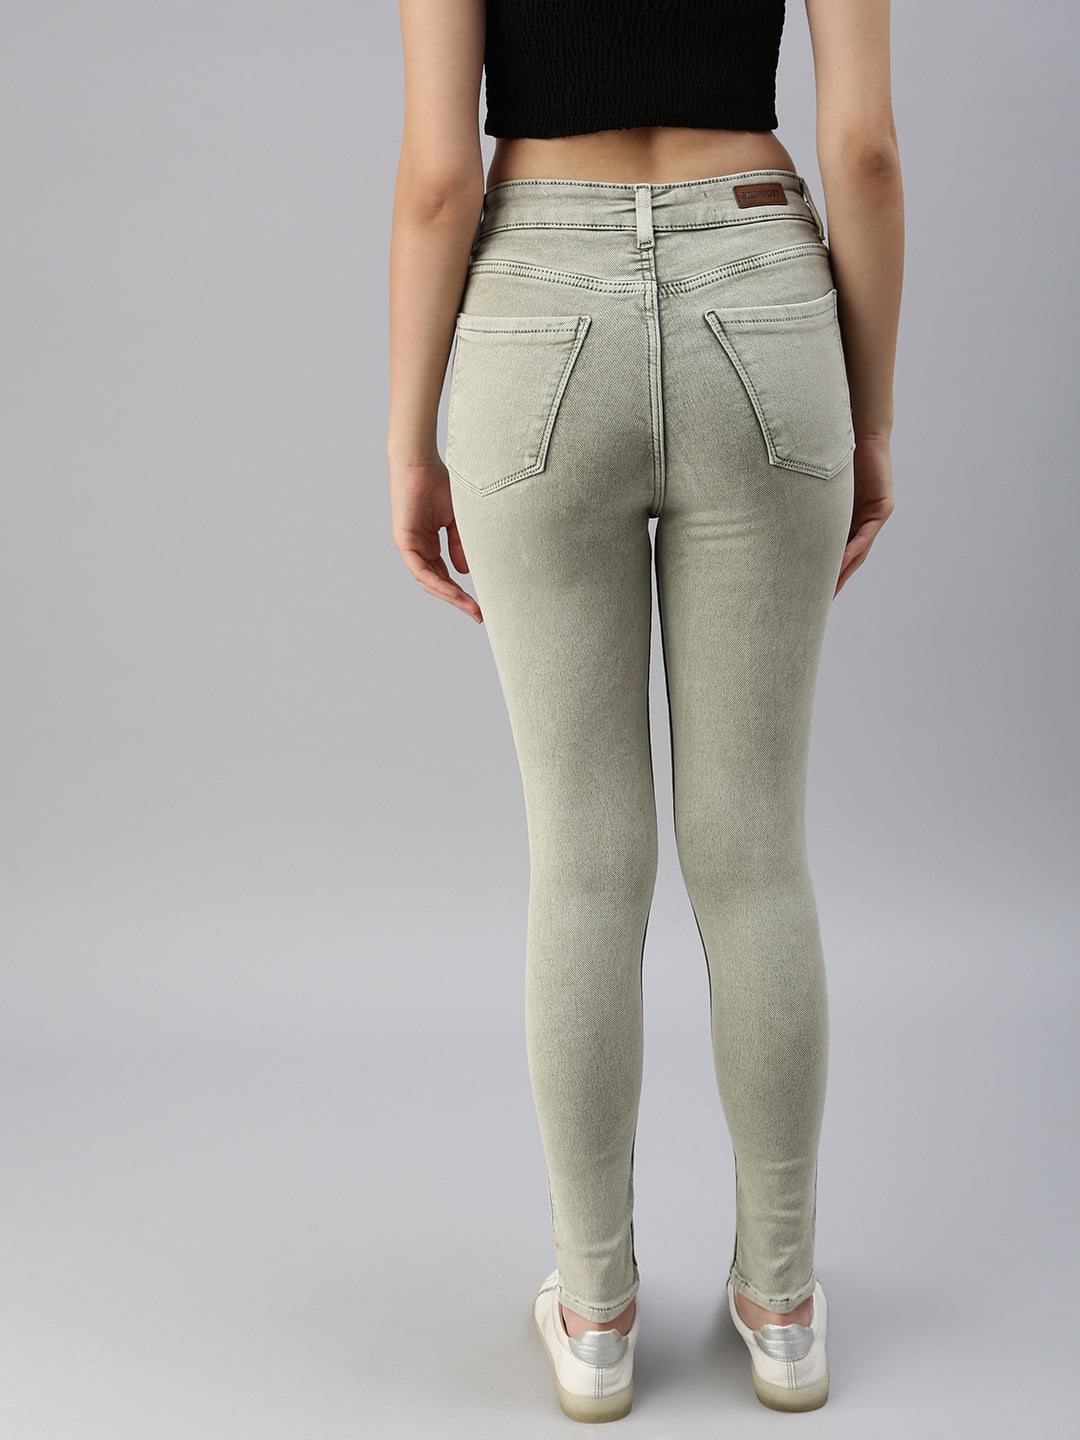 Women's Olive Solid Denim Skinny Jeans